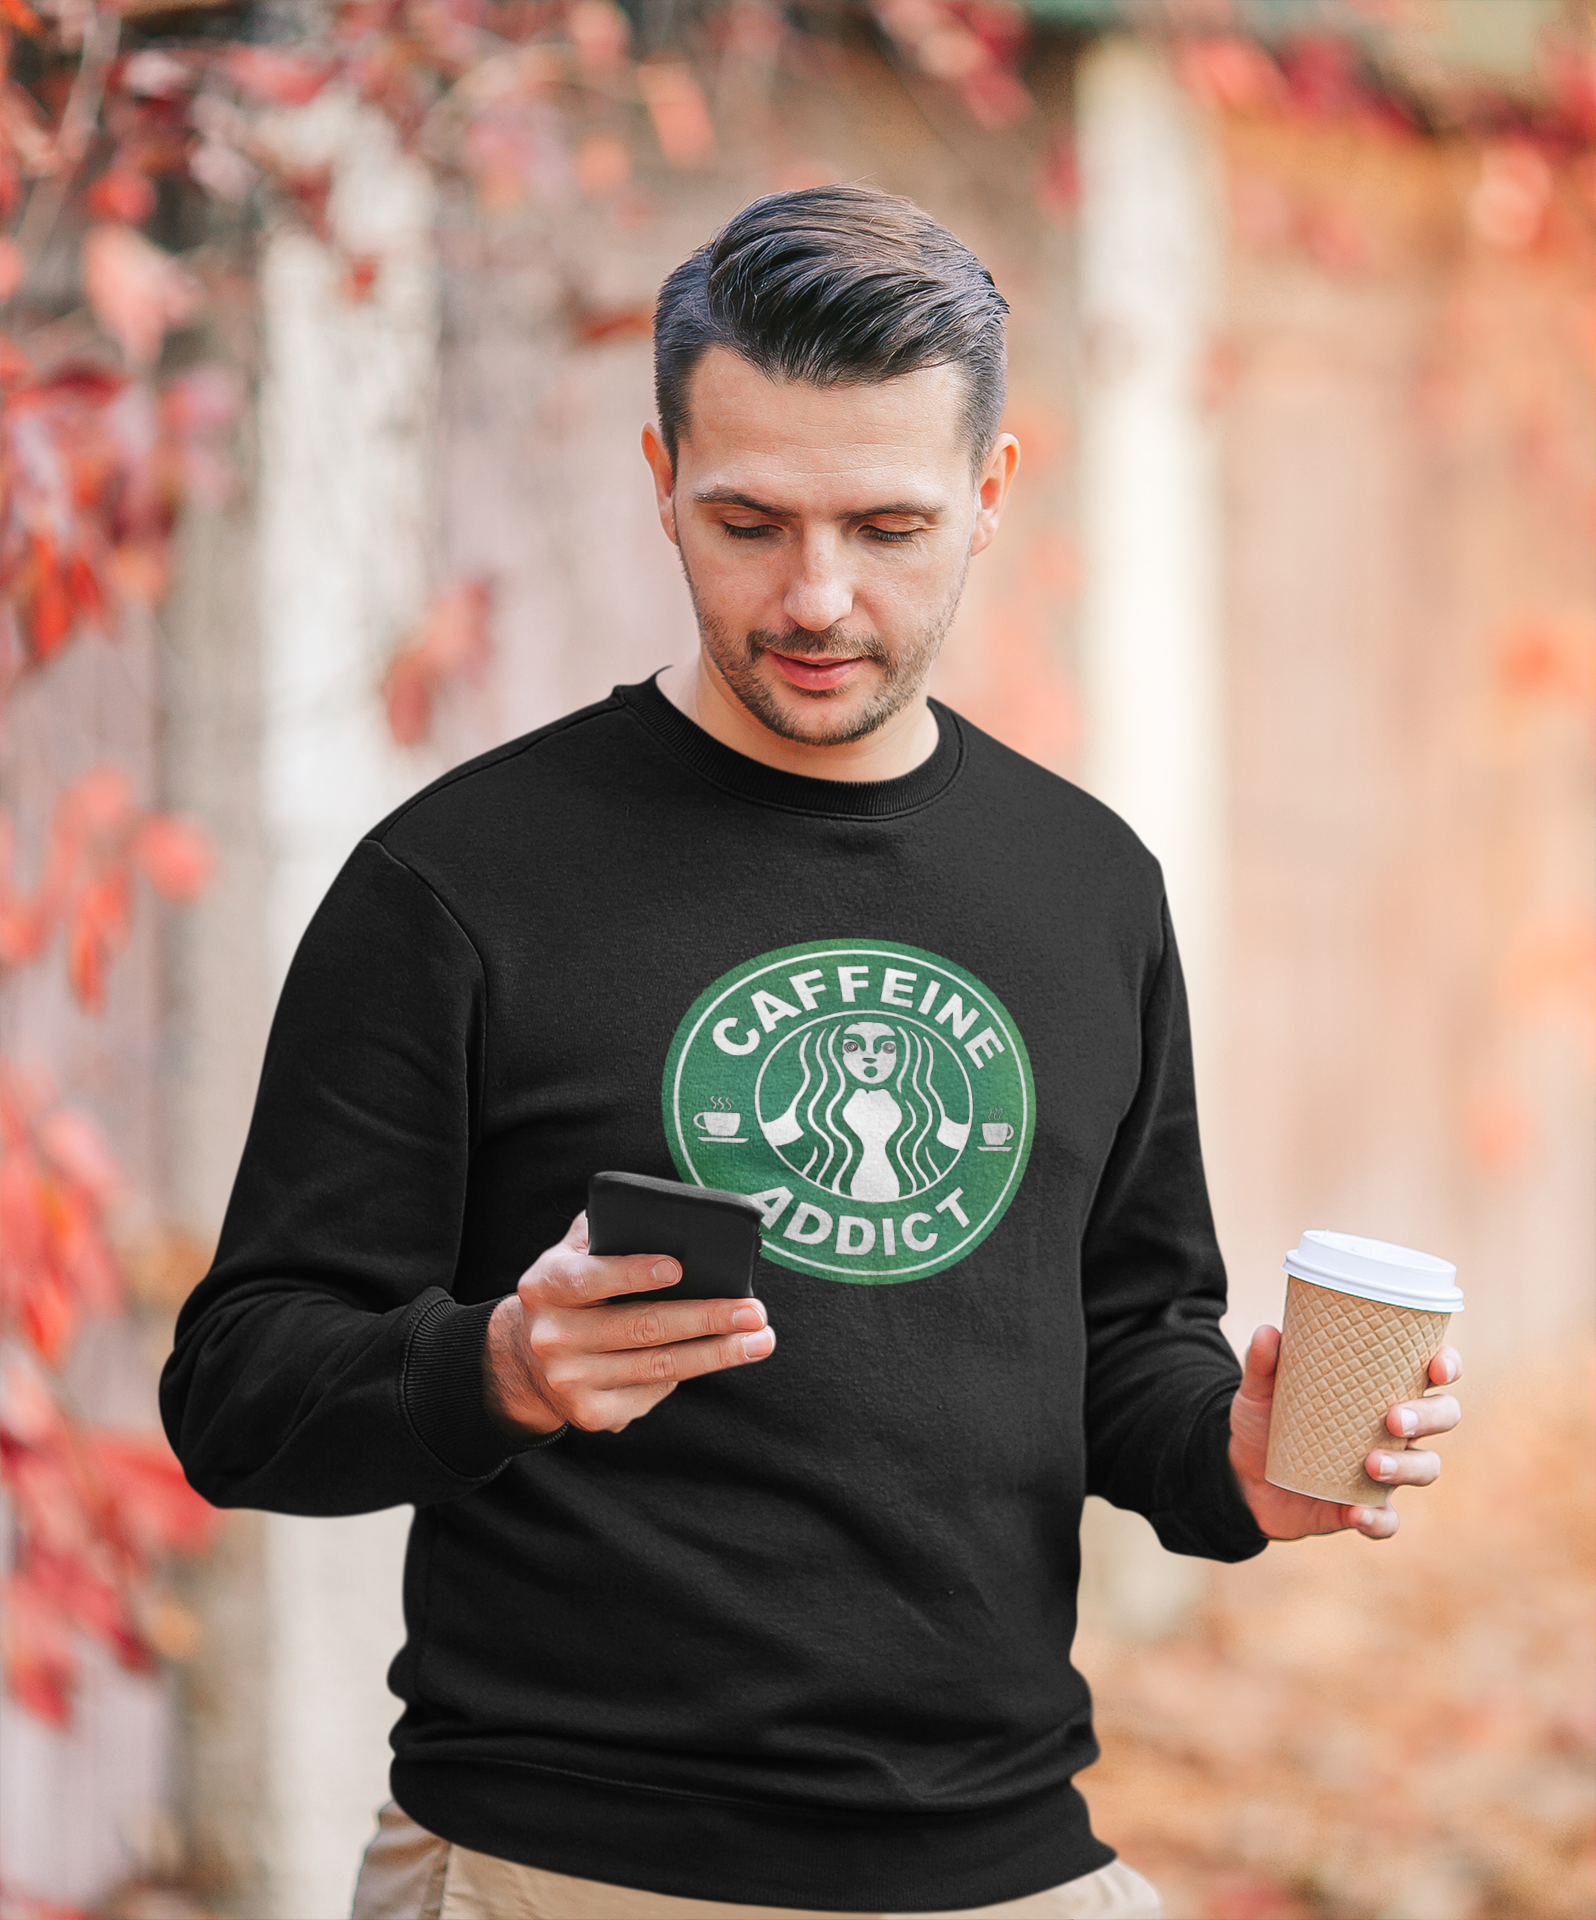 Caffeine Addict - Winter Sweatshirts